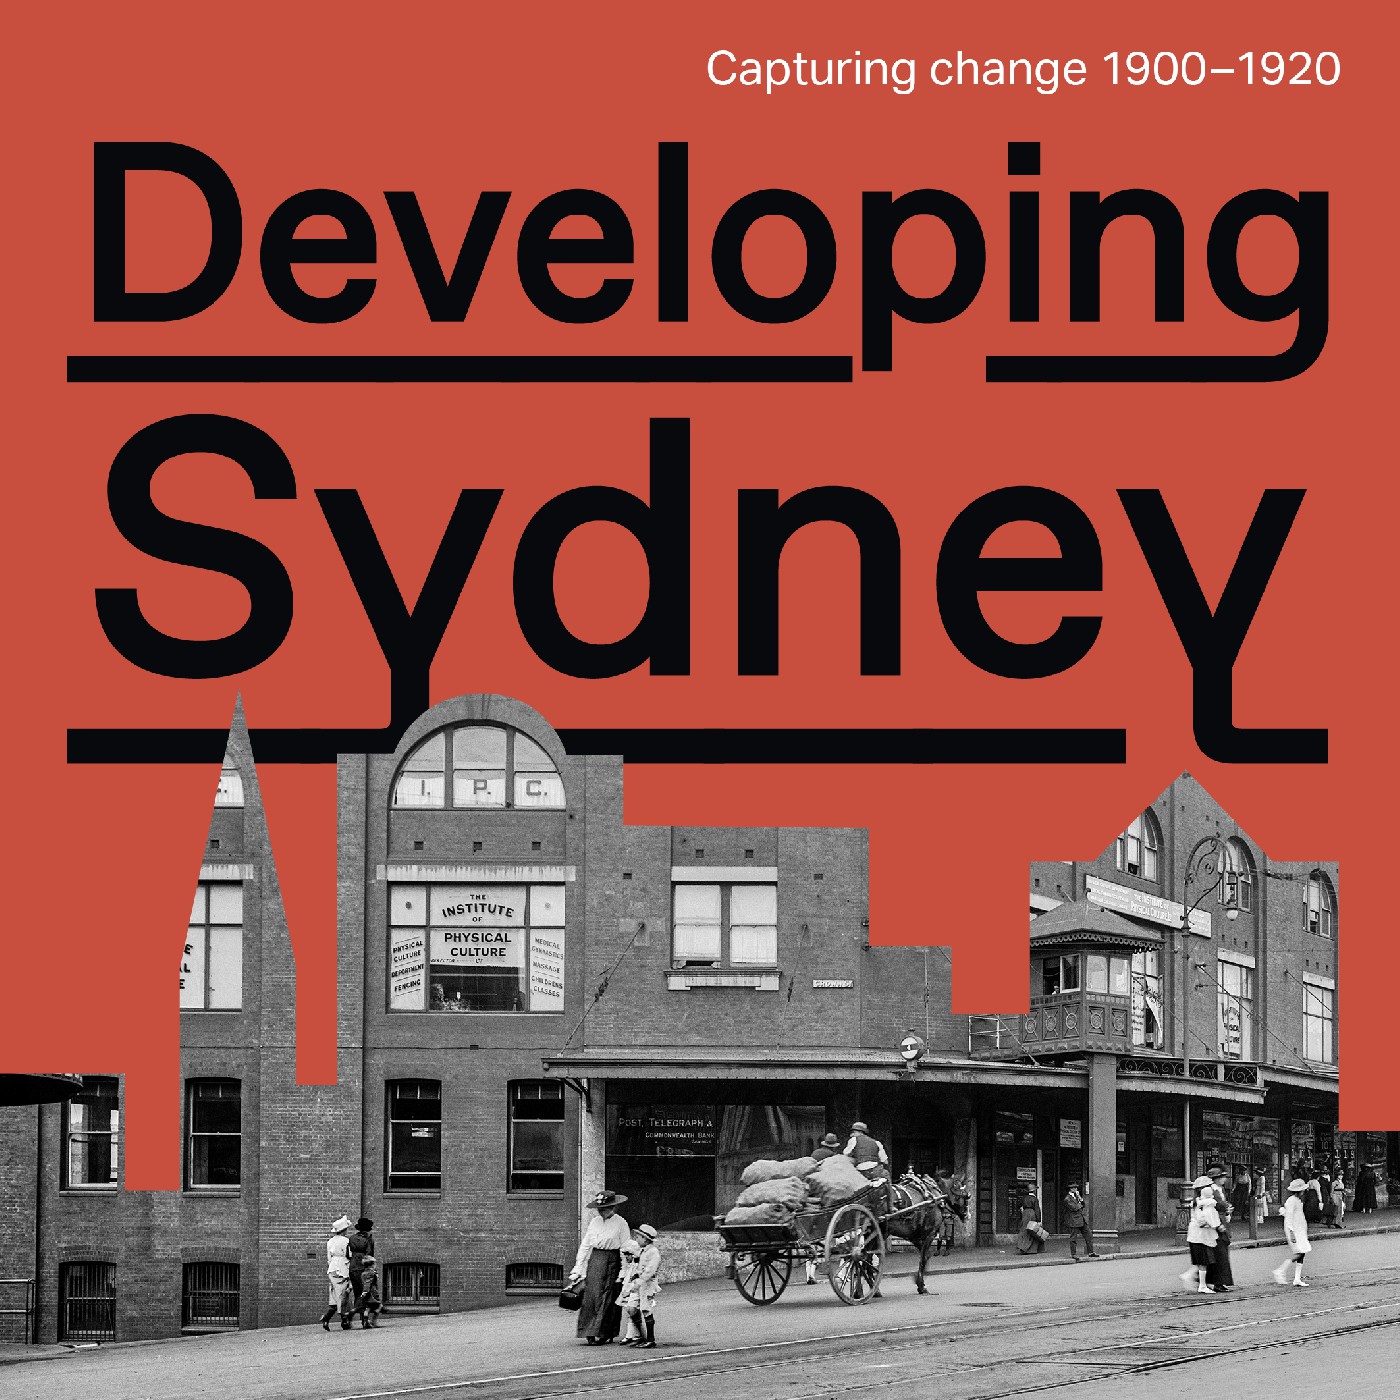 Developing Sydney: Capturing change 1900-1920